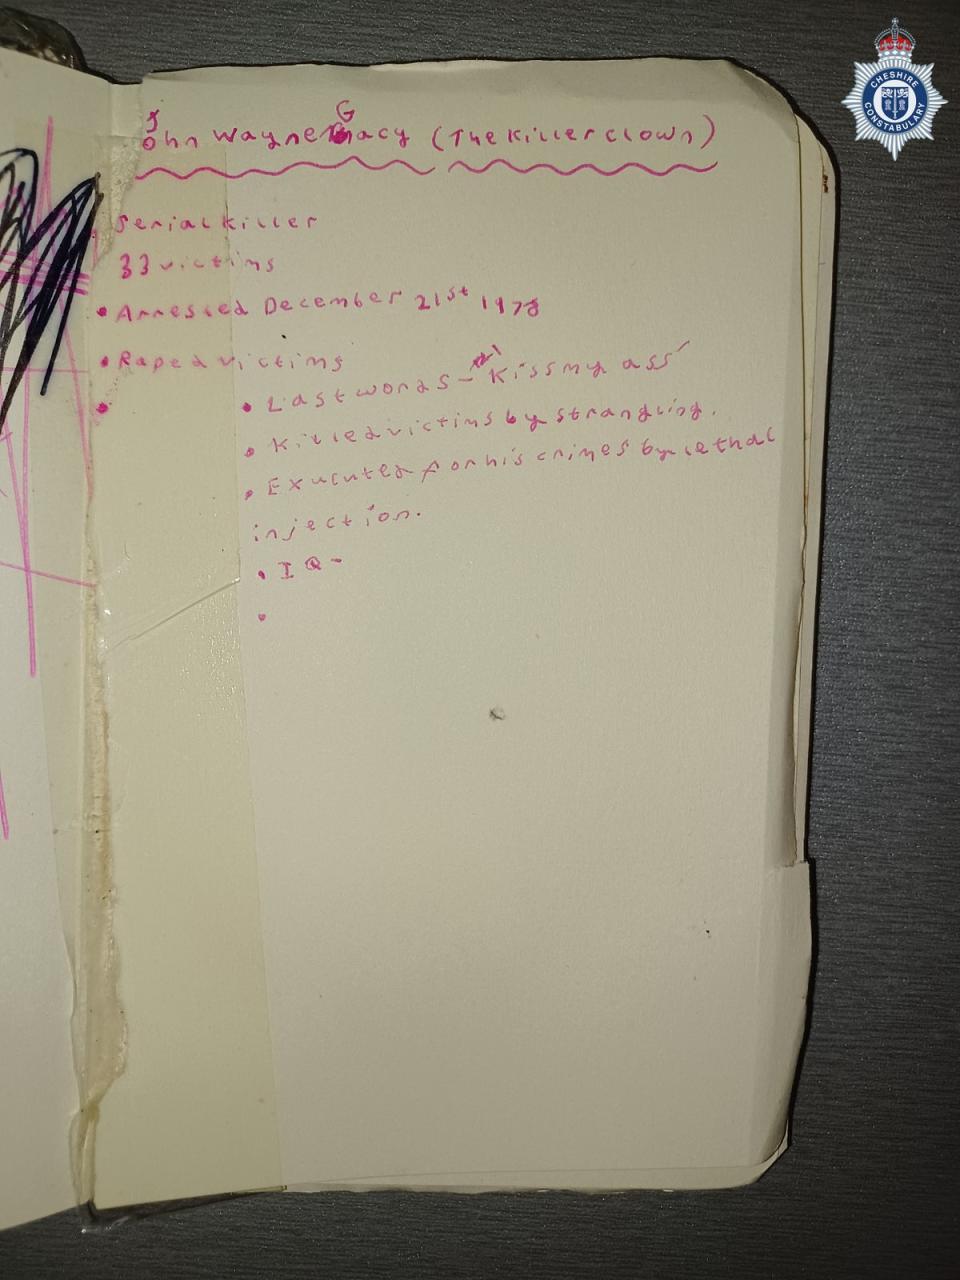 Jenkinson wrote about serial killer John Wayne Gacy in her notebook (PA)